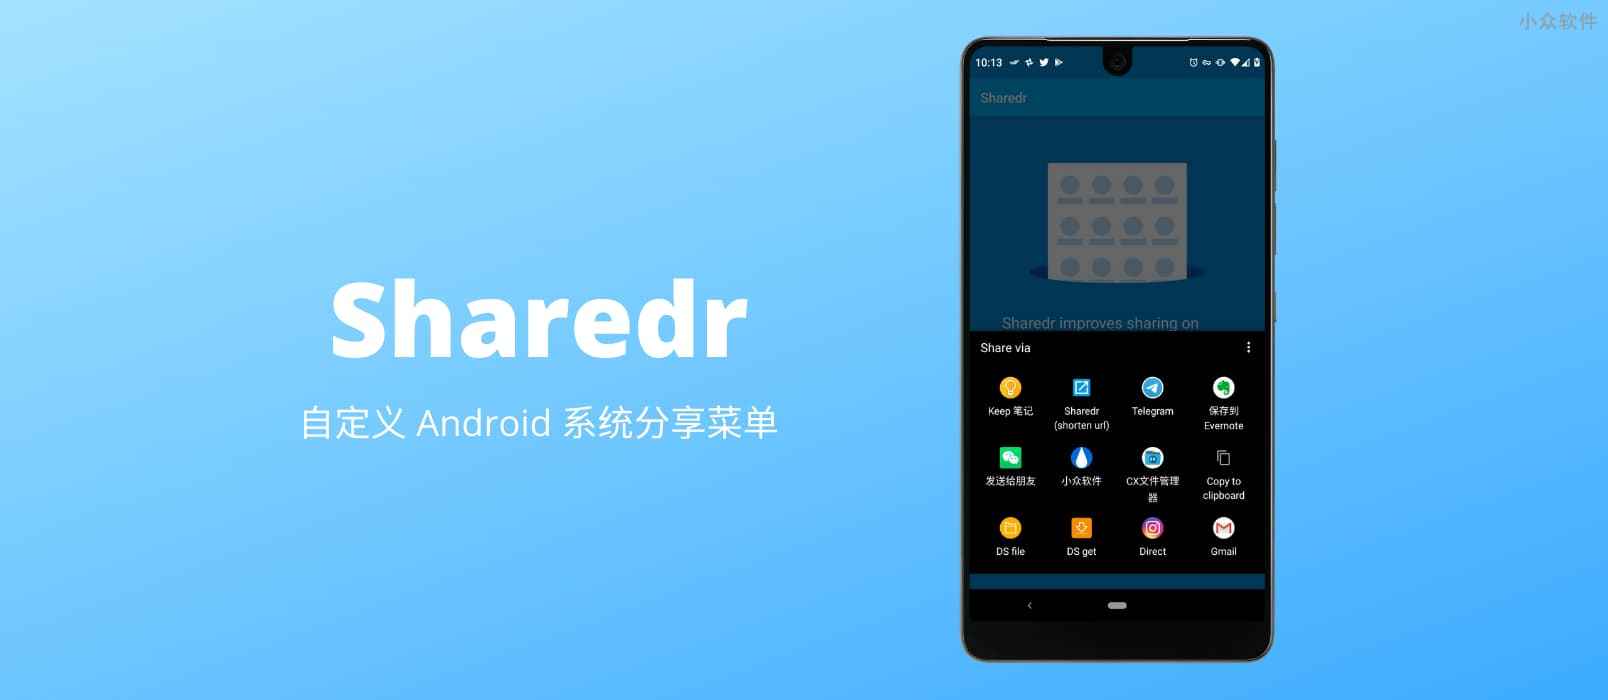 Sharedr – 自定义 Android 系统分享菜单